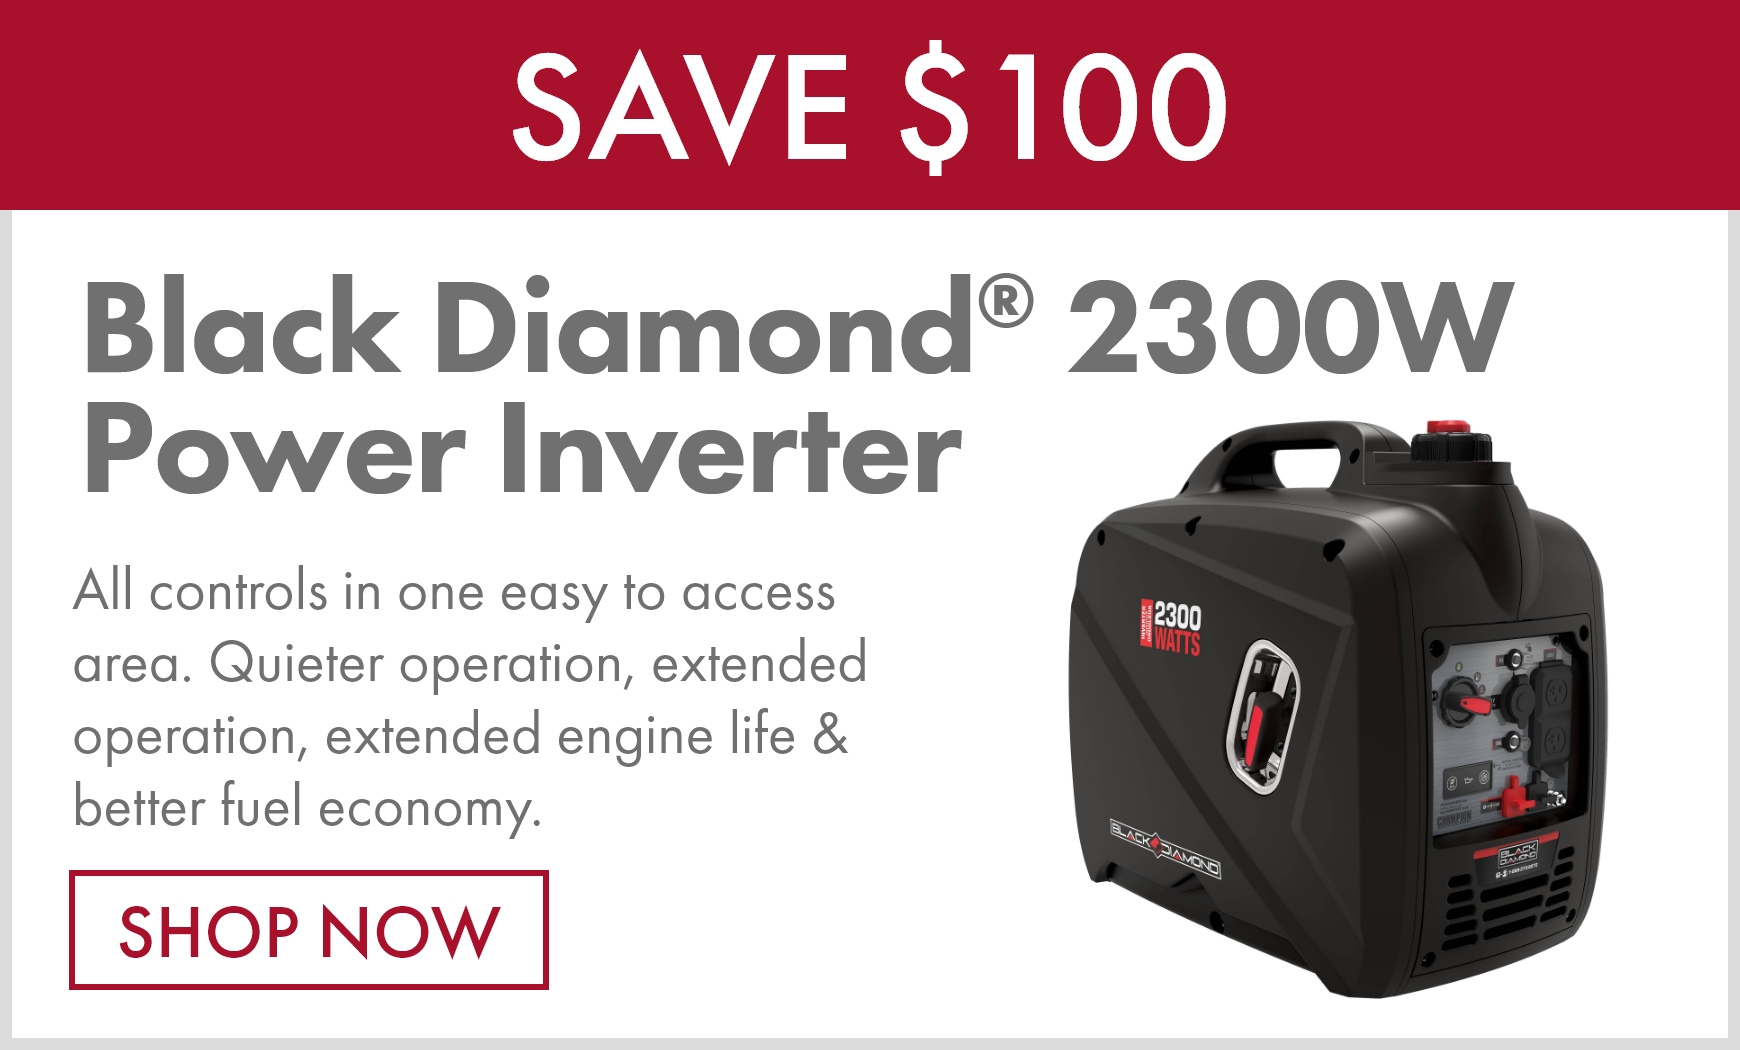 Black Diamond® 2300W Power Inverter